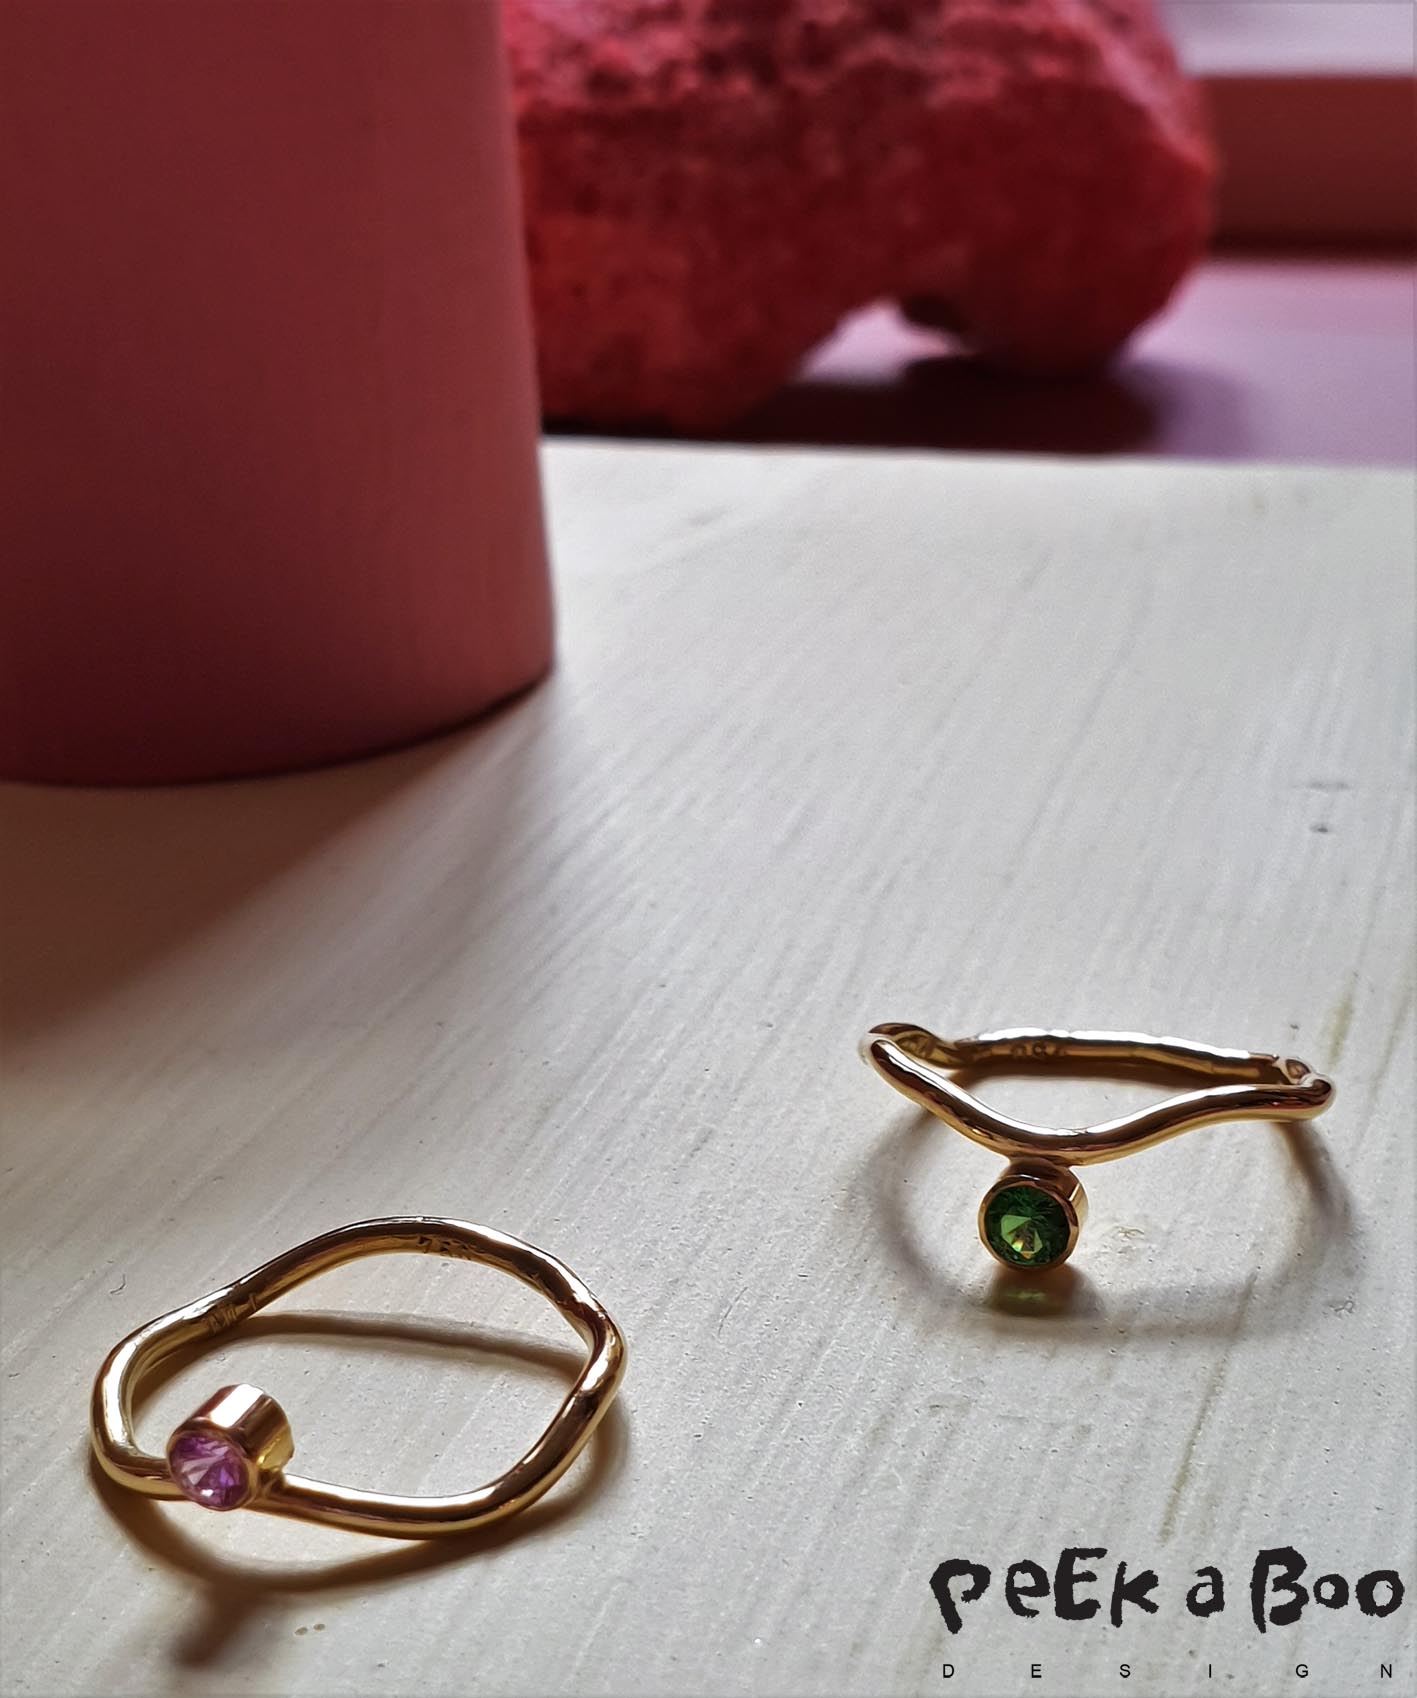 Marylou jewellery's beautiful rings.